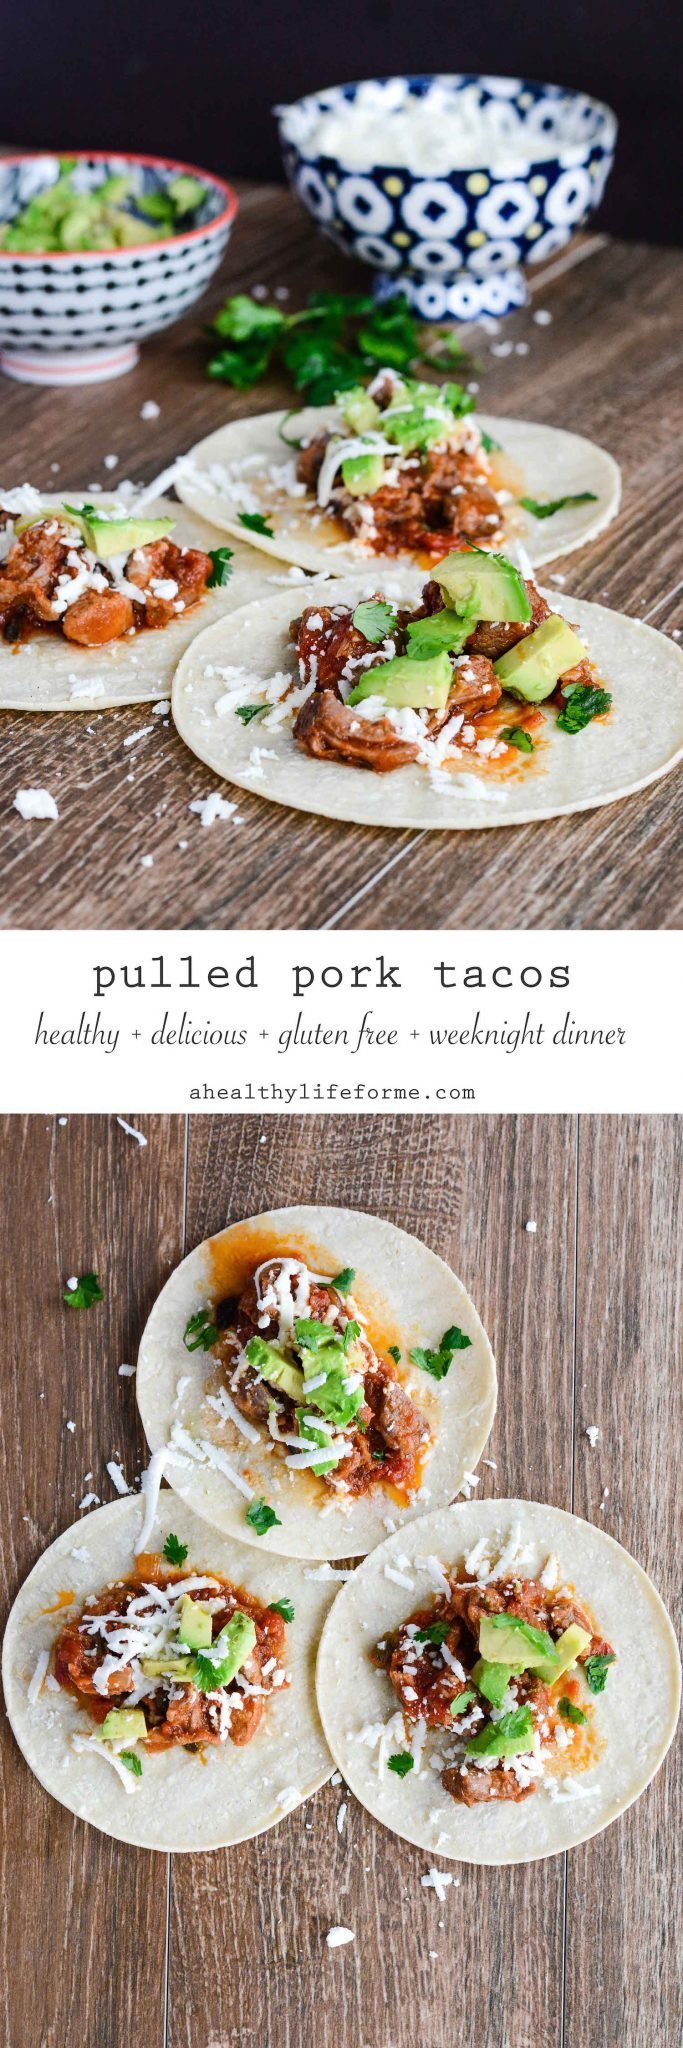 Pulled Pork Tacos Gluten Free Weeknight Dinner Recipe | ahealthylifeforme.com